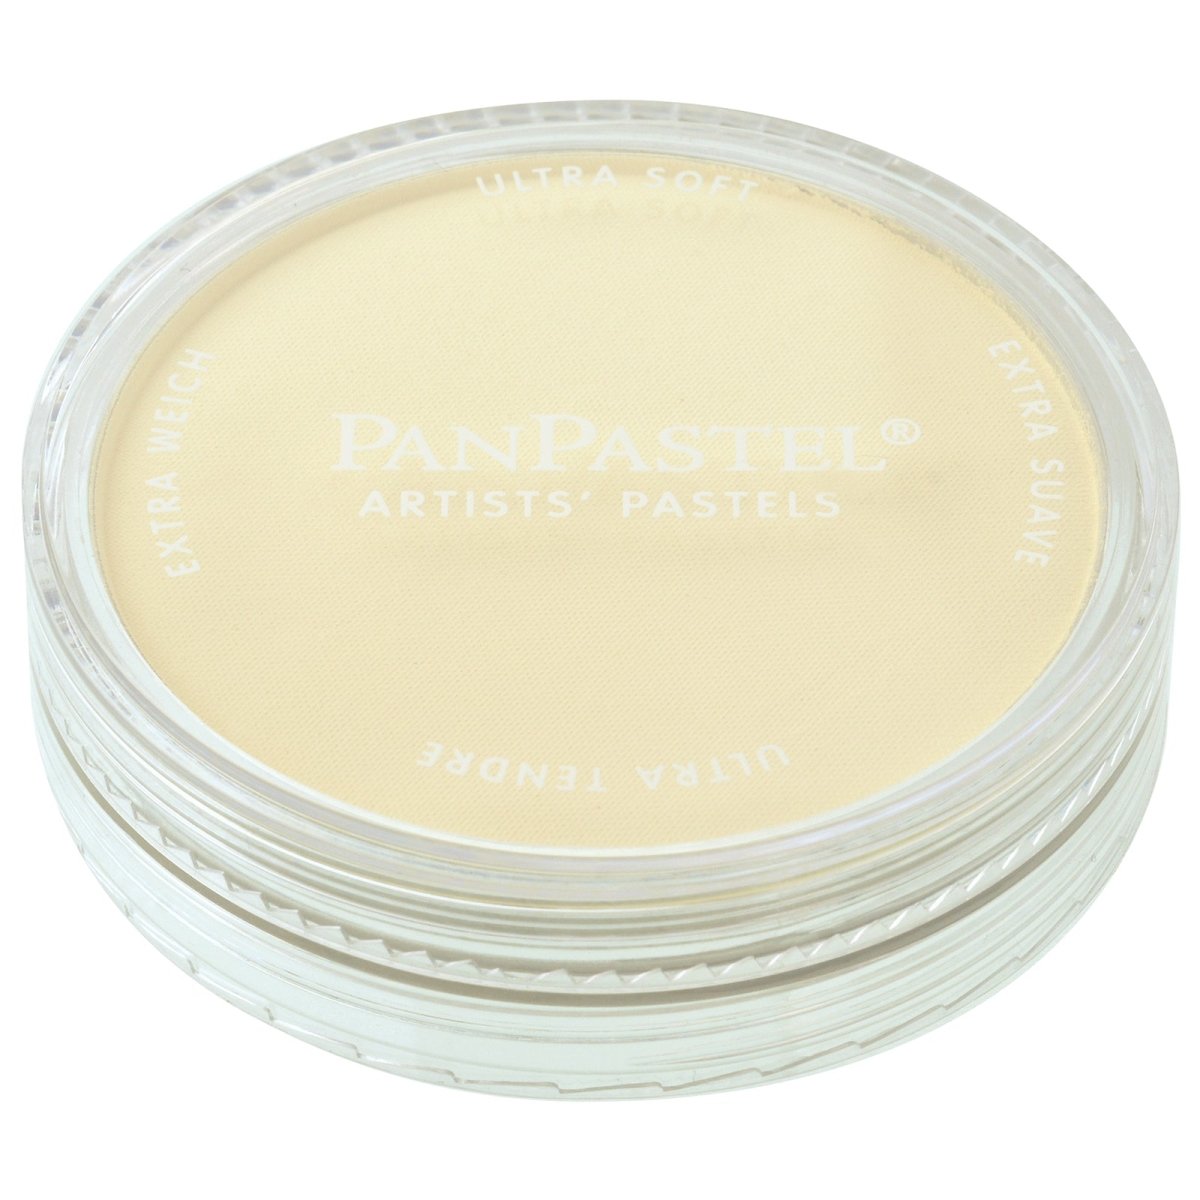 PanPastel Artist Pastel - 9ml - Hansa Yellow Tint - merriartist.com